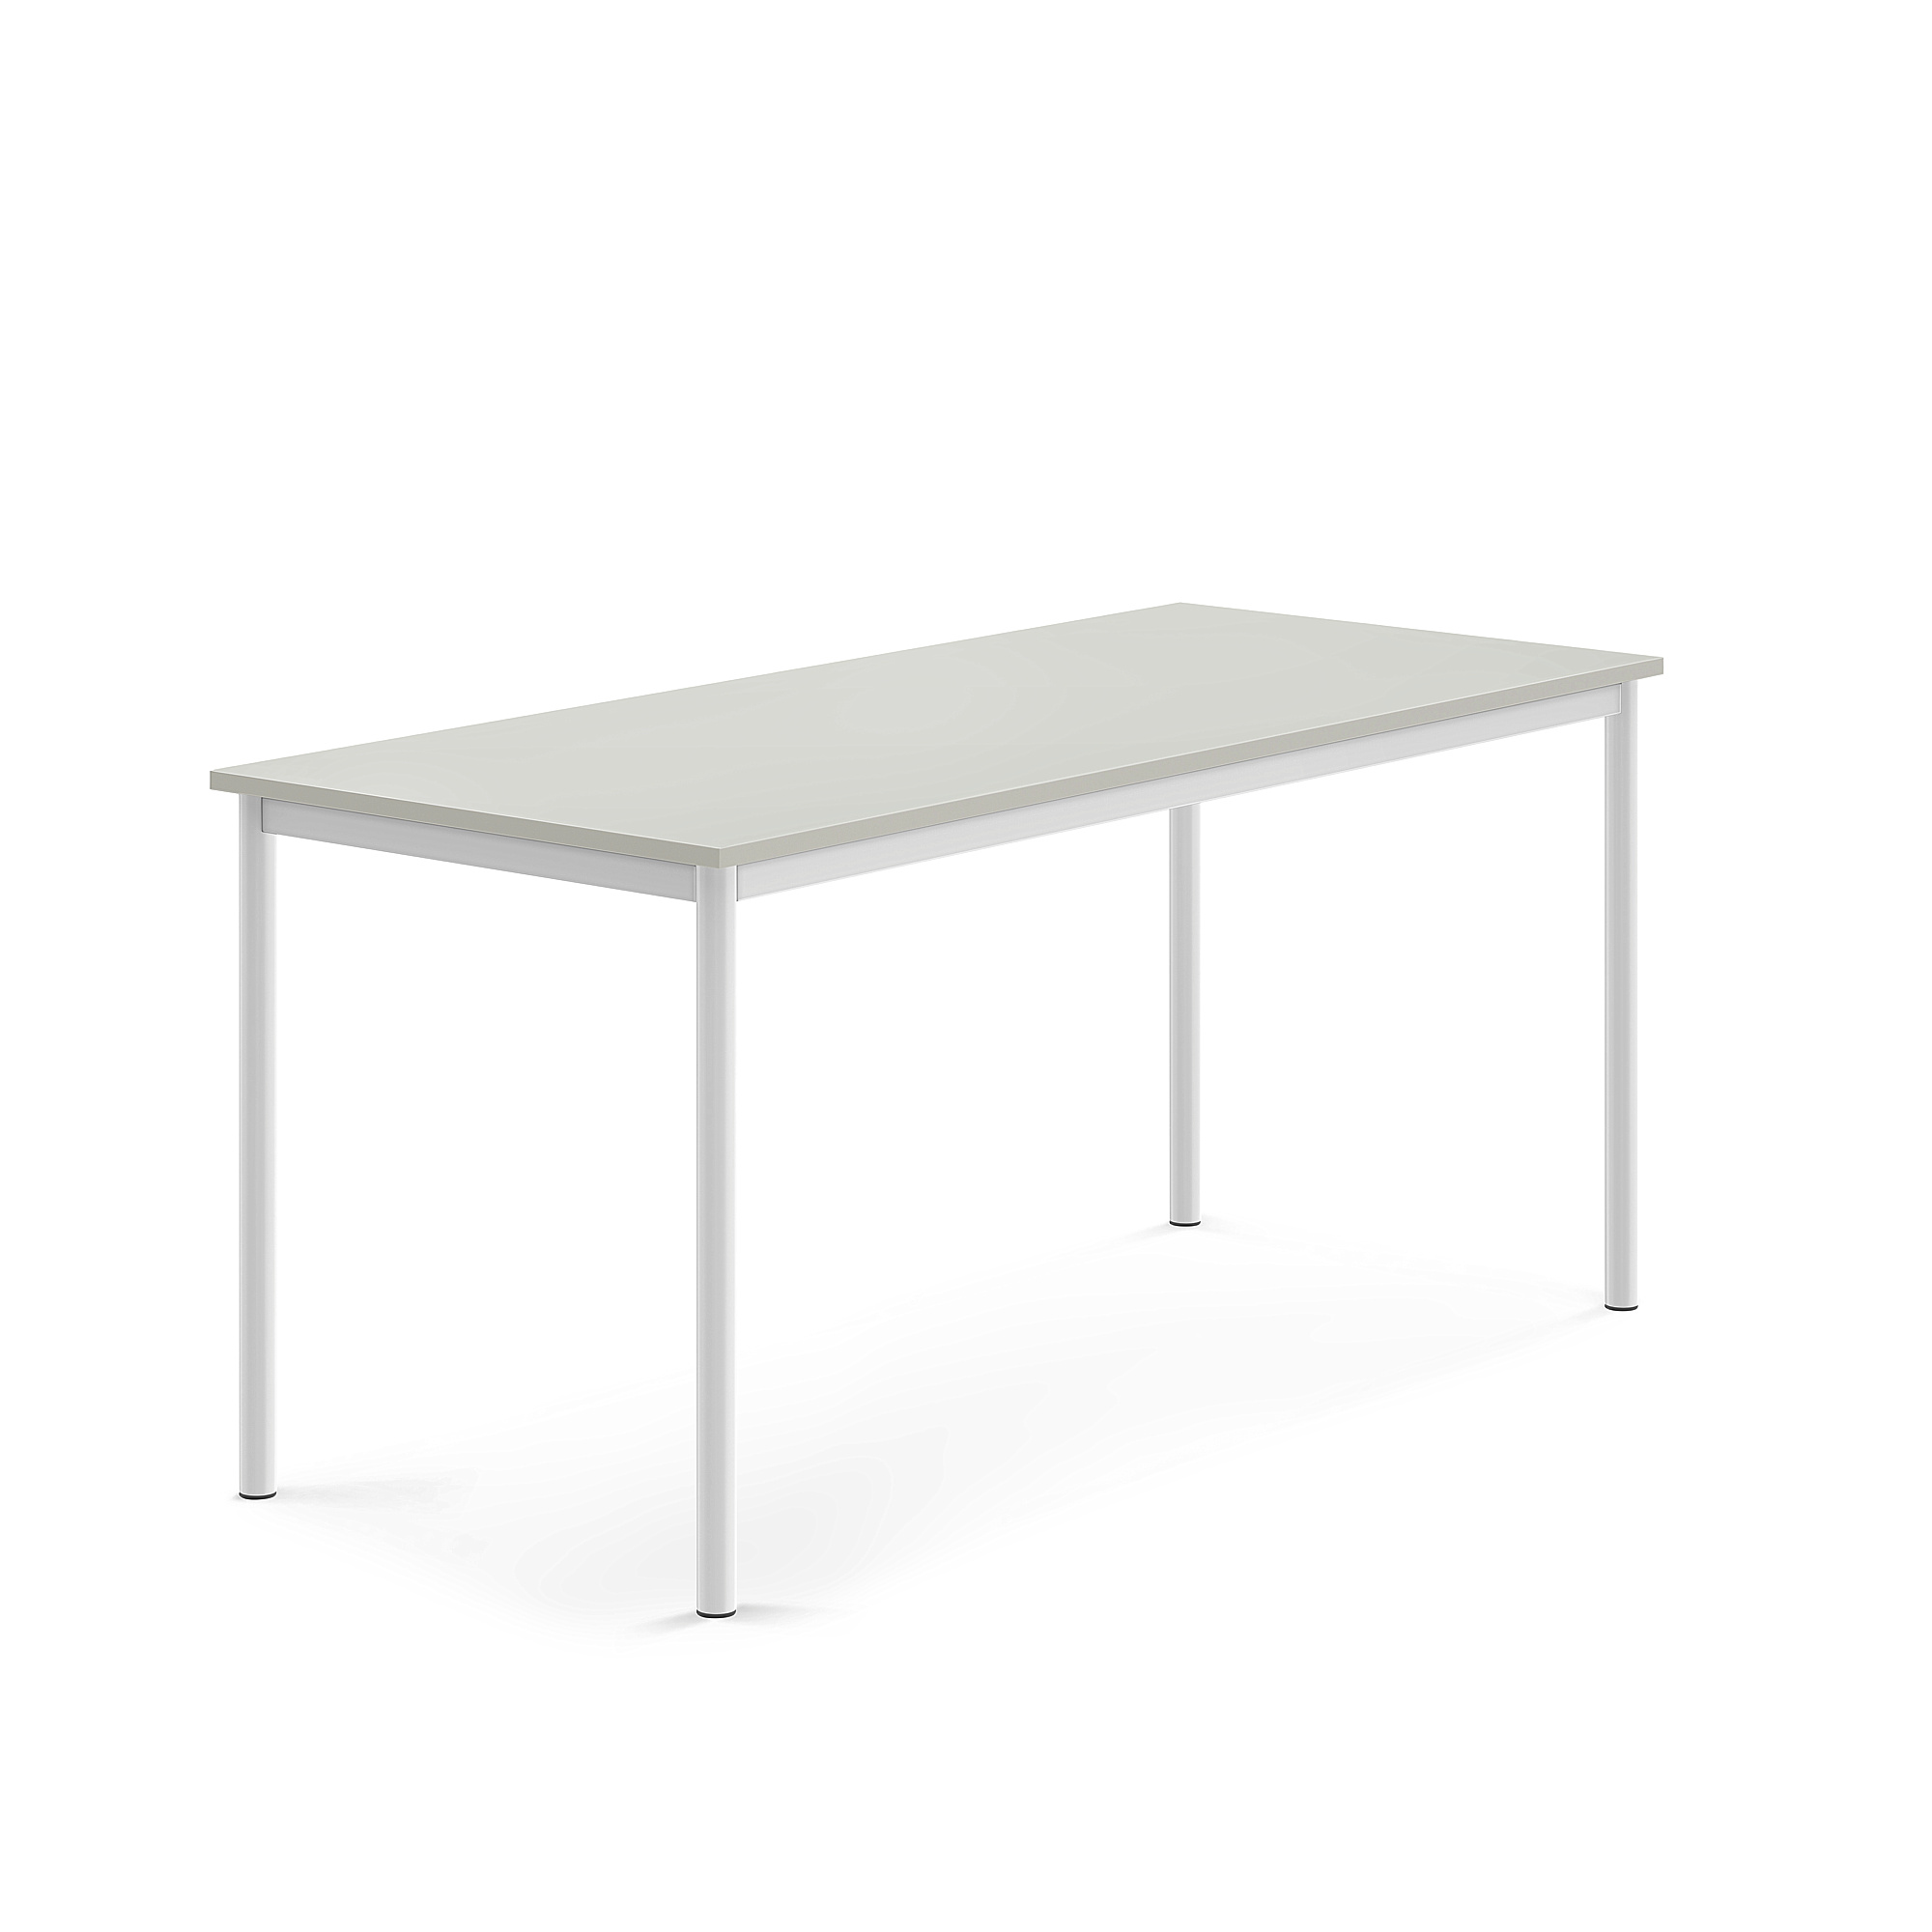 Stůl SONITUS, 1600x700x720 mm, bílé nohy, HPL deska tlumící hluk, šedá